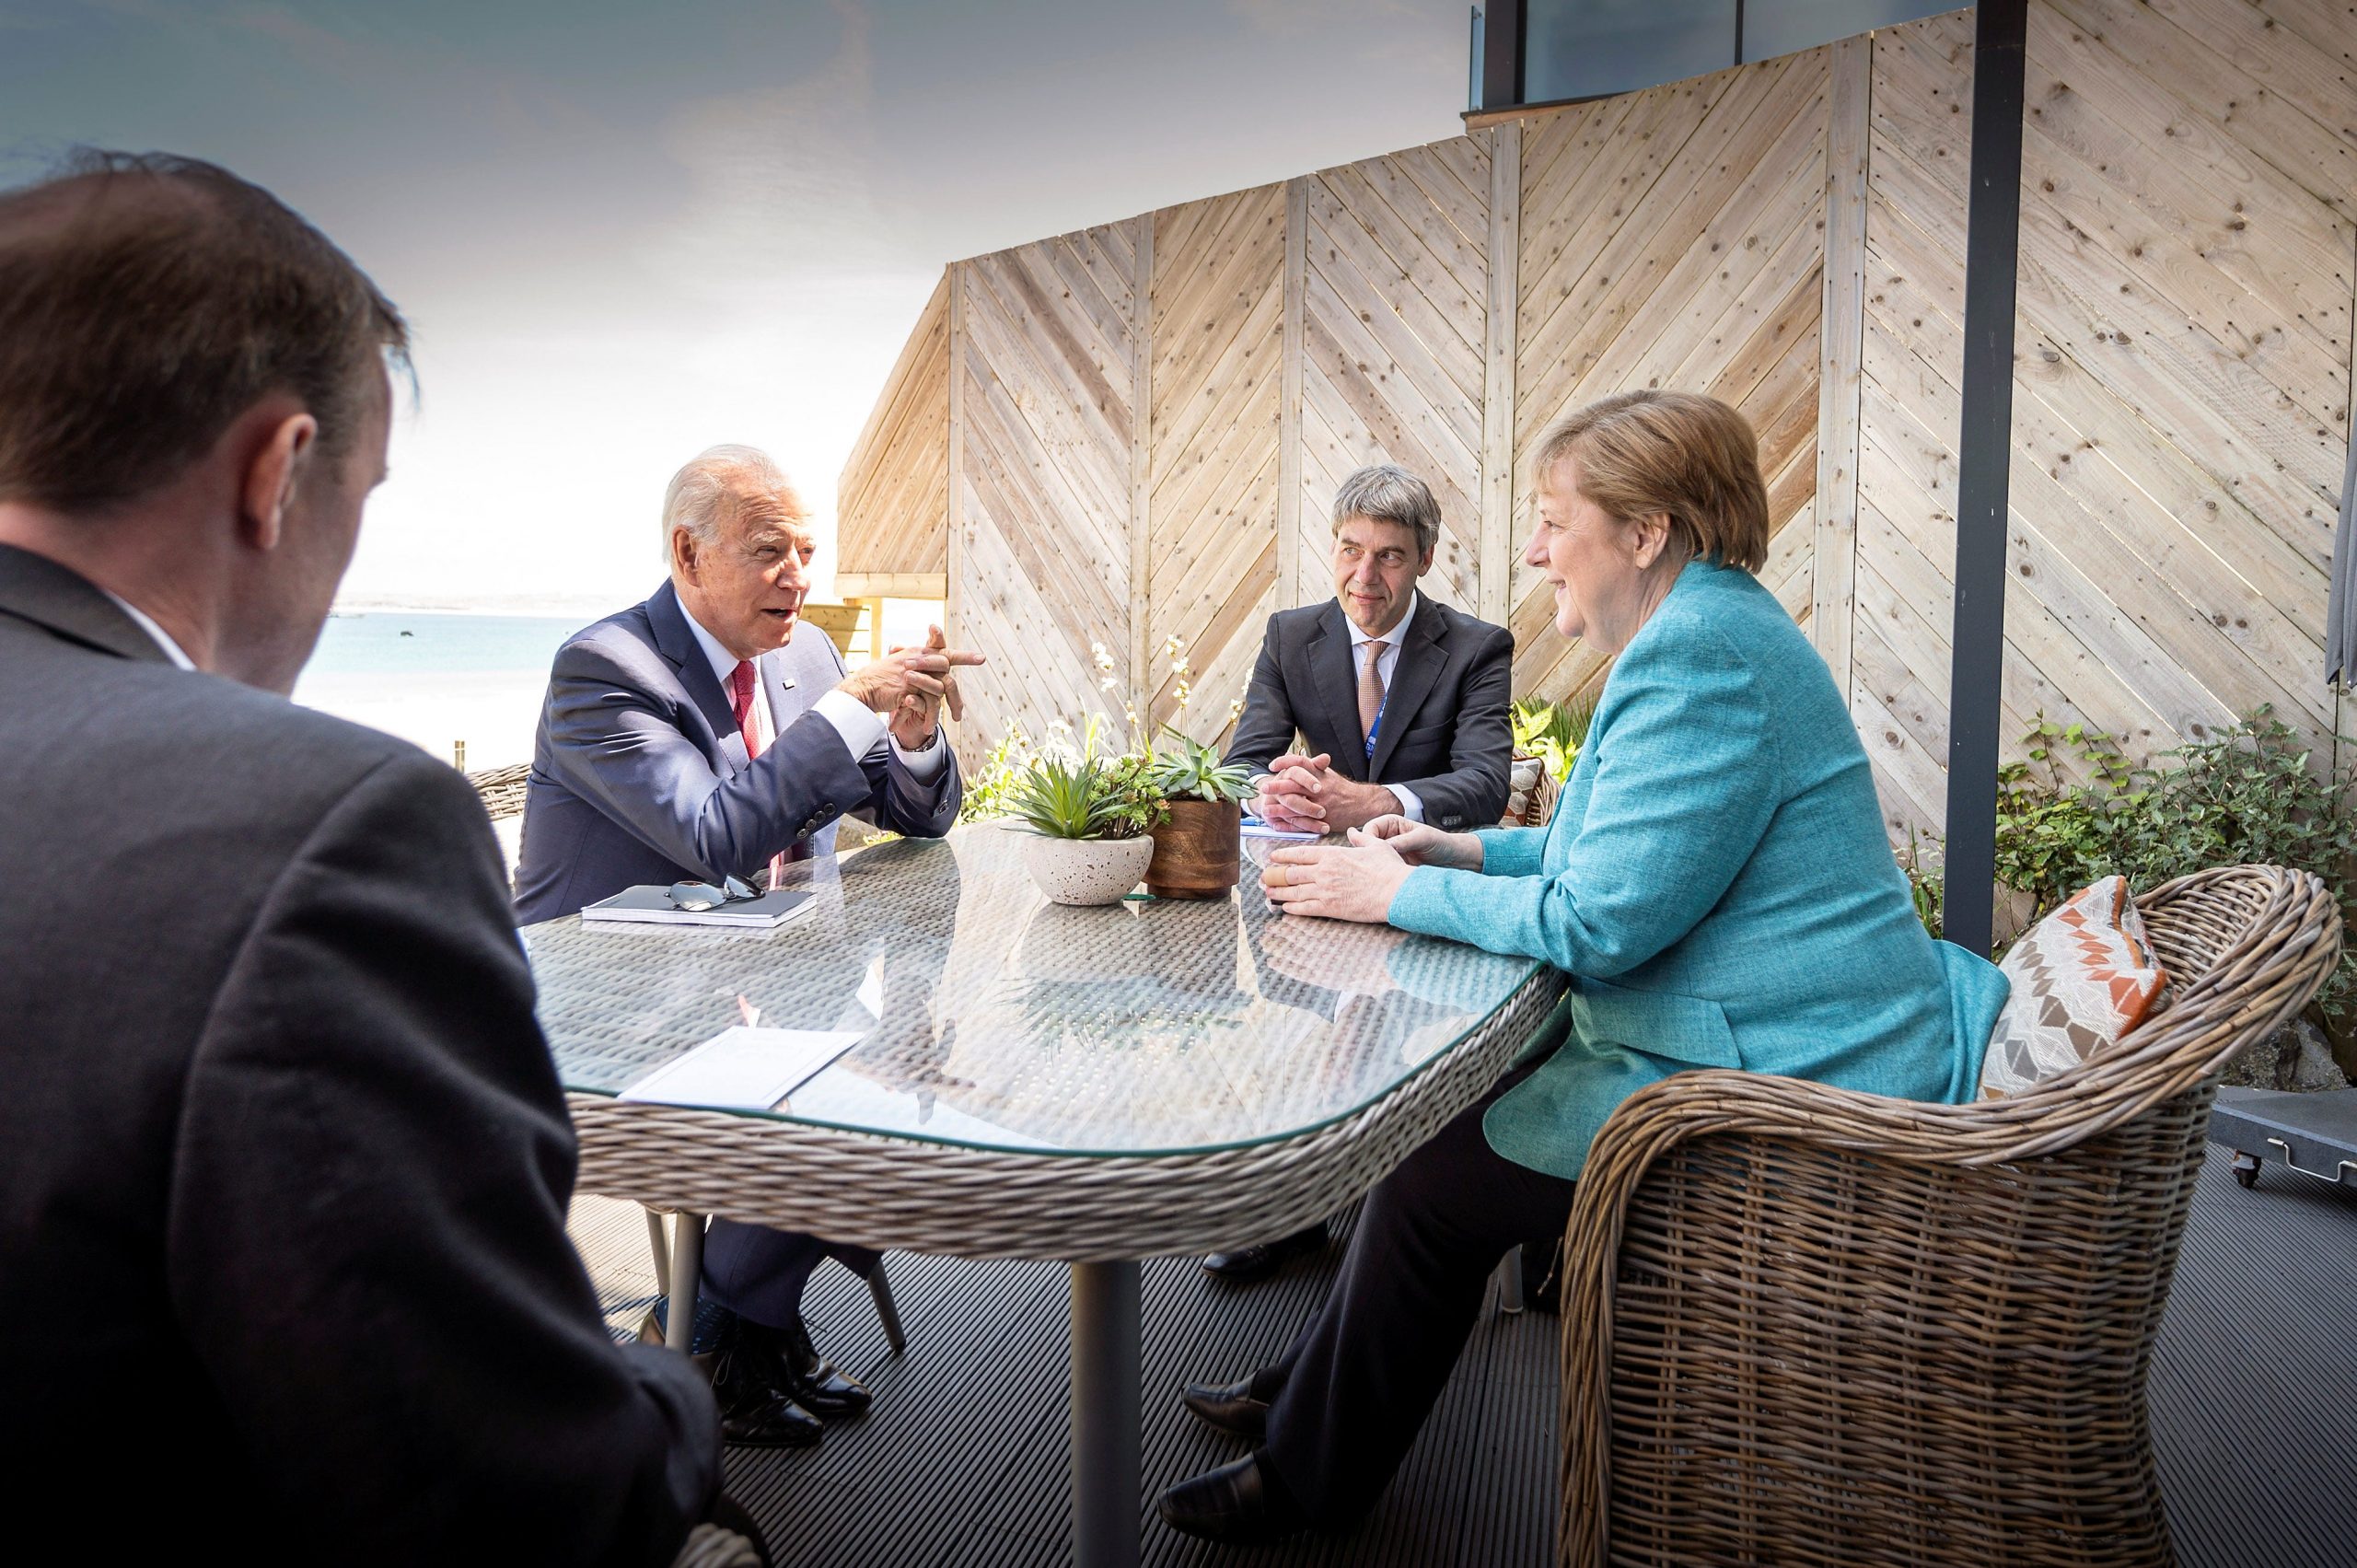 President Joe Biden and German Chancellor Angela Merkel talk with in England.